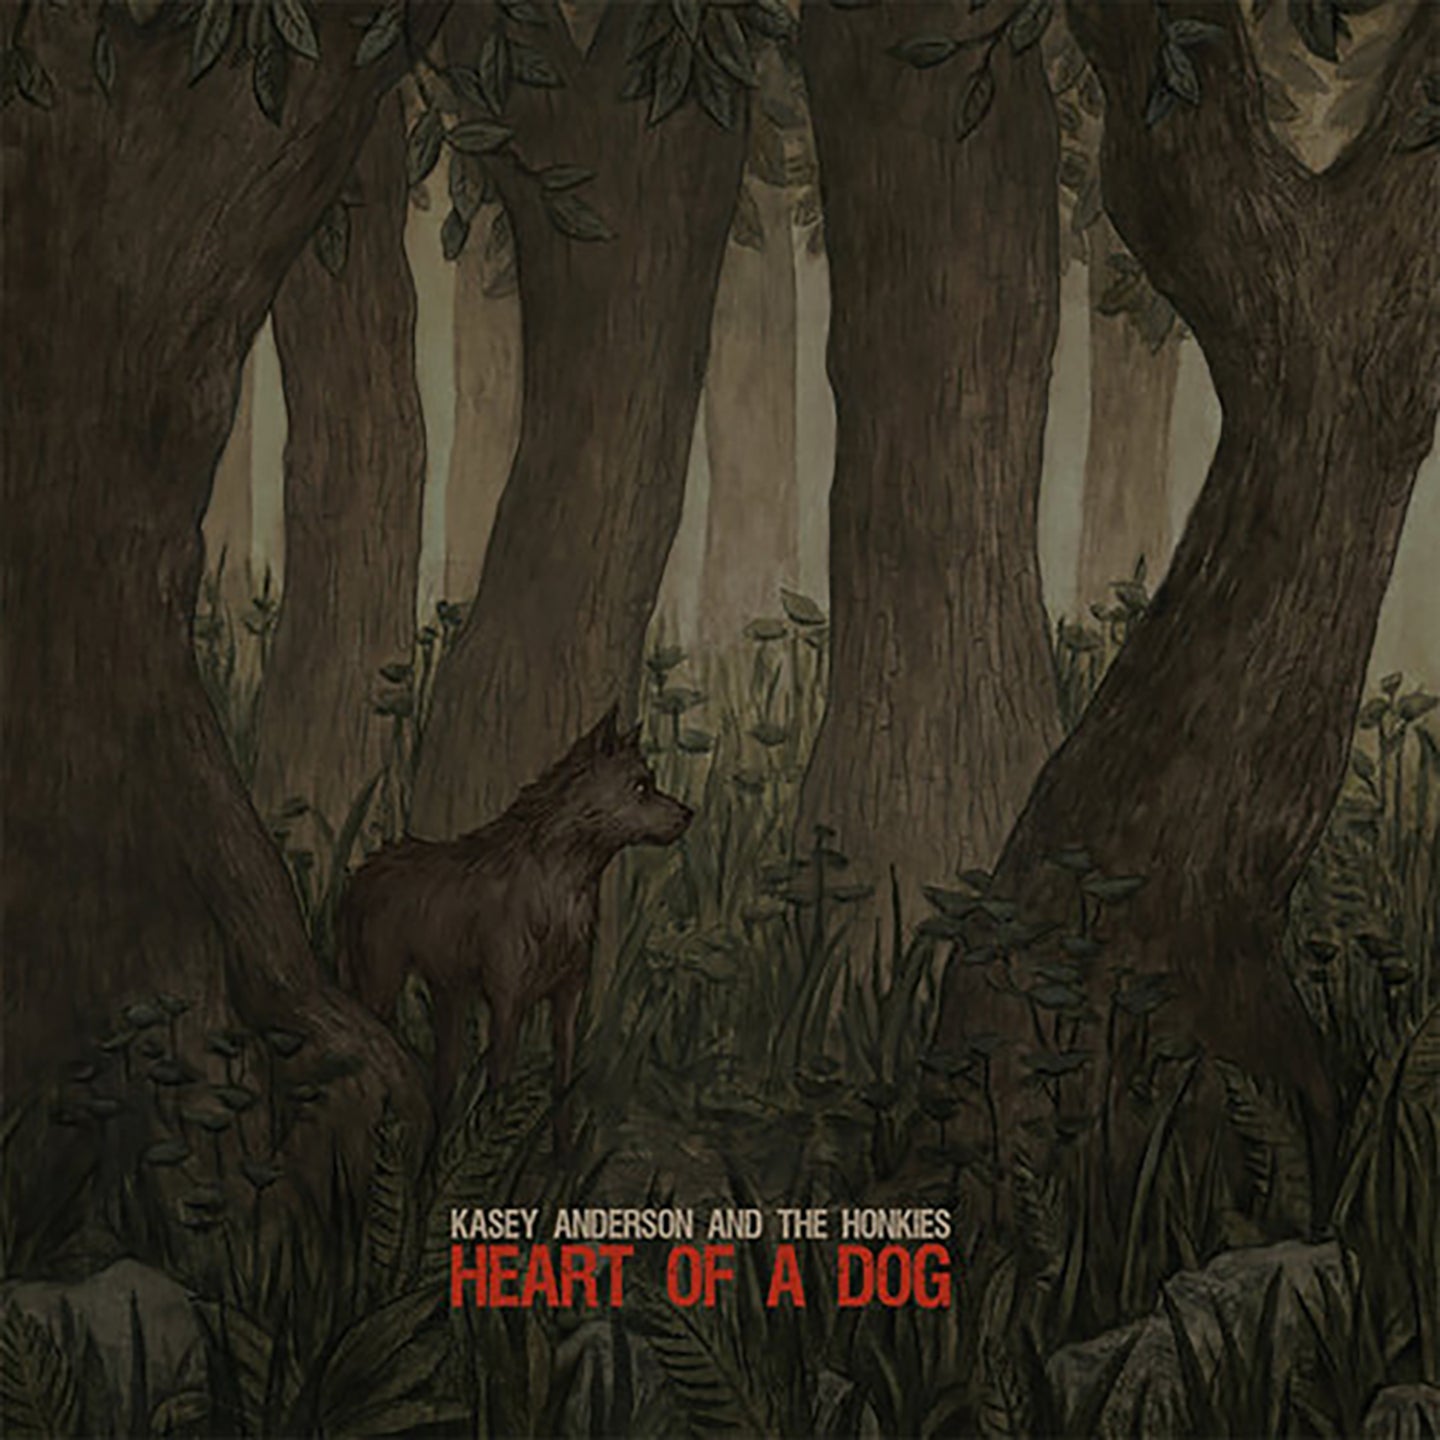 HEART OF A DOG DIGITAL ALBUM